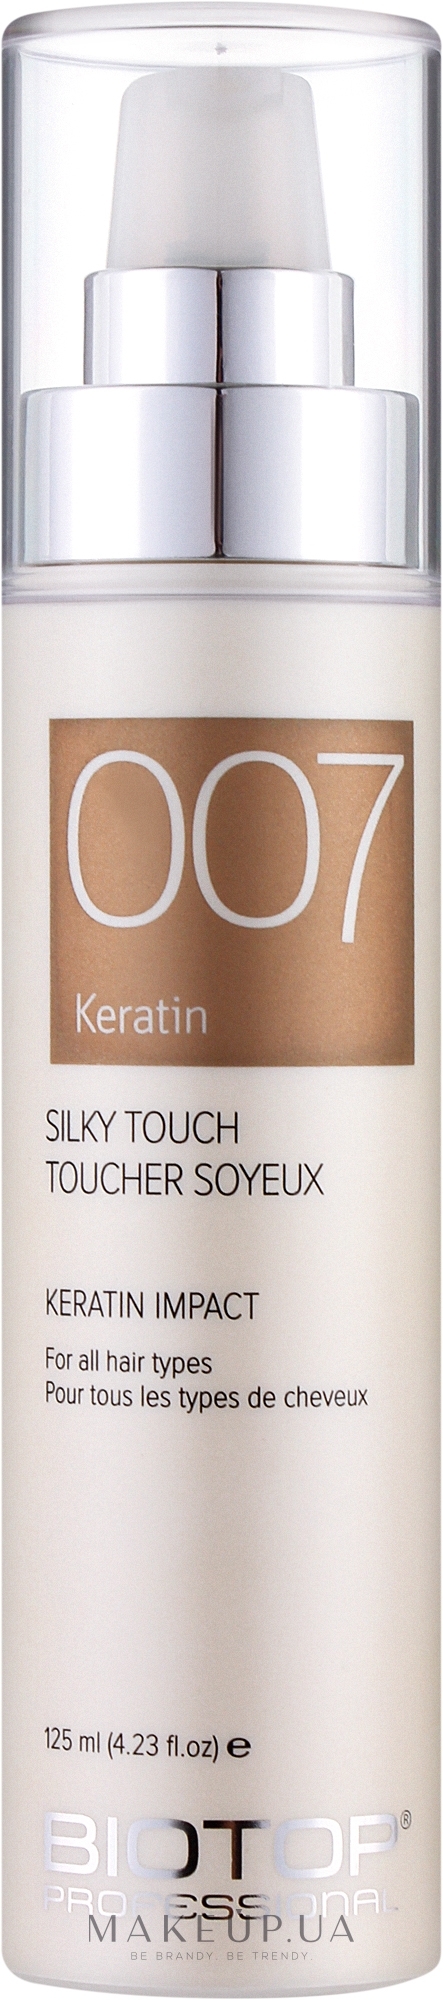 Сыворотка для укладки волос с кератином - Biotop 007 Keratin Silky Touch — фото 125ml